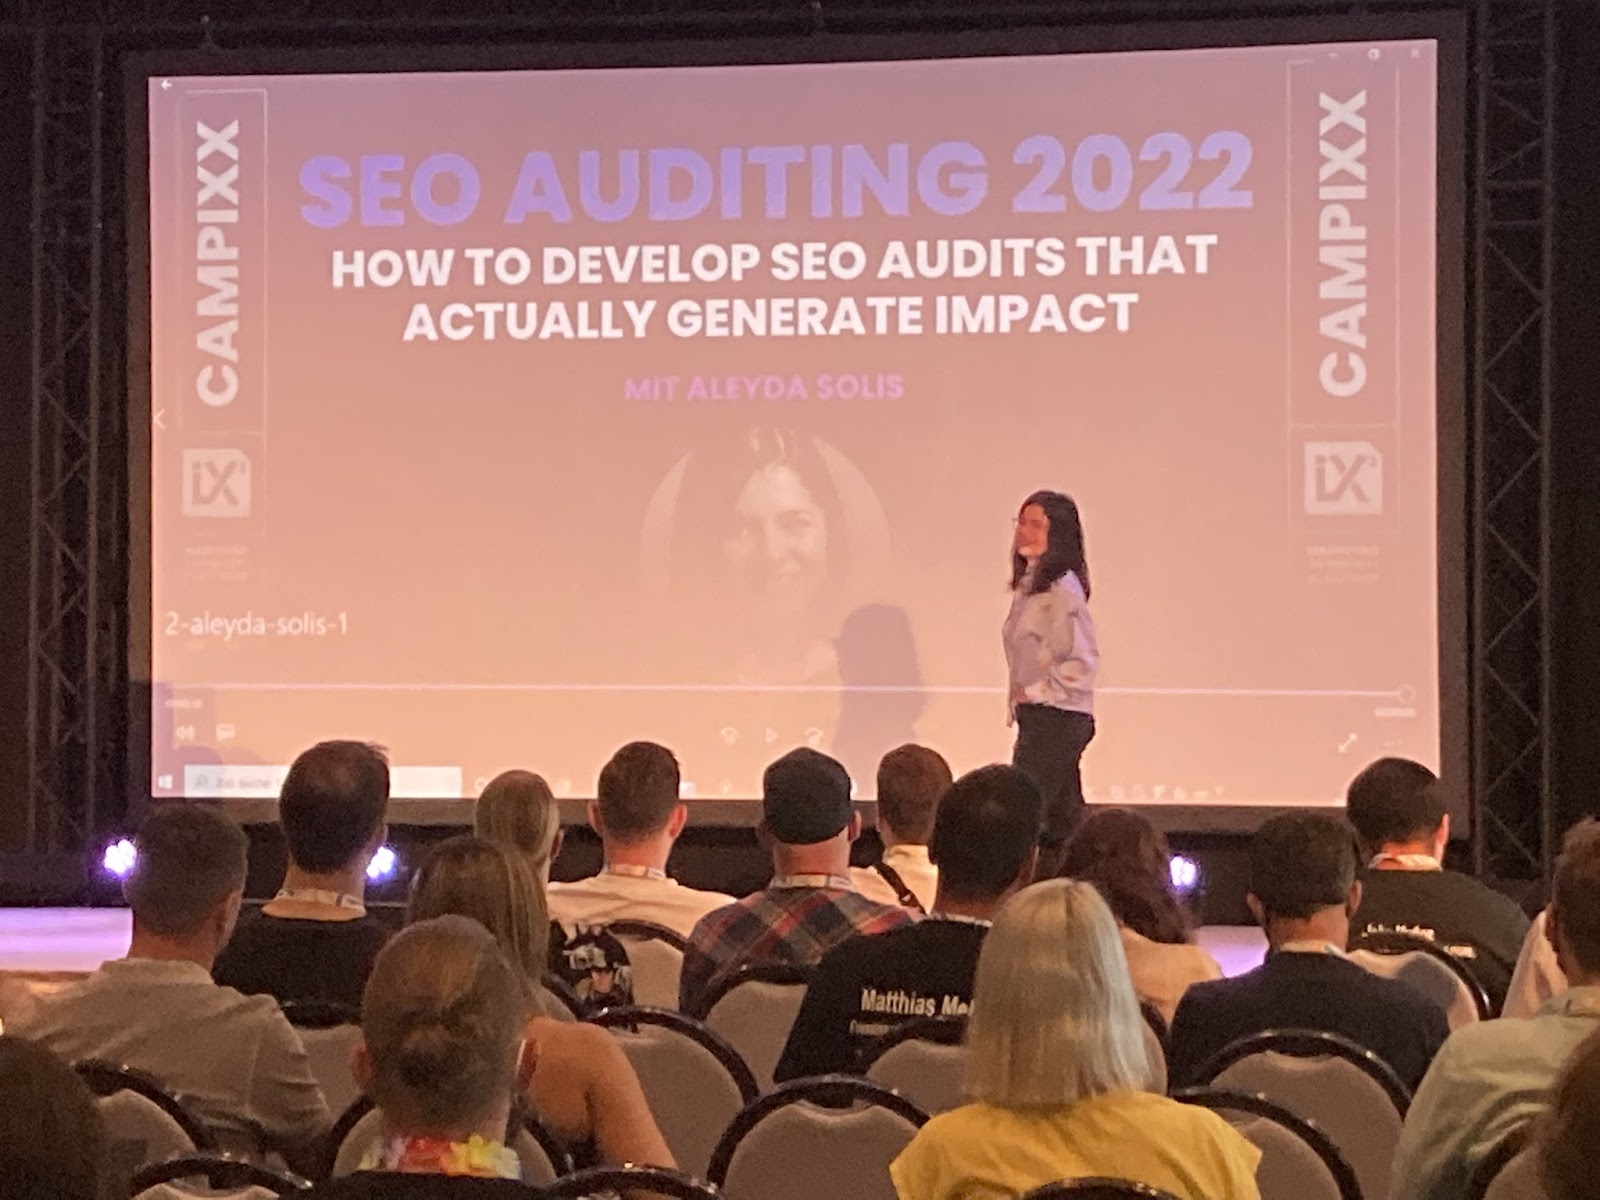 Aleyda Solis auf der Campixx: Develop SEO audits that actually generate impact